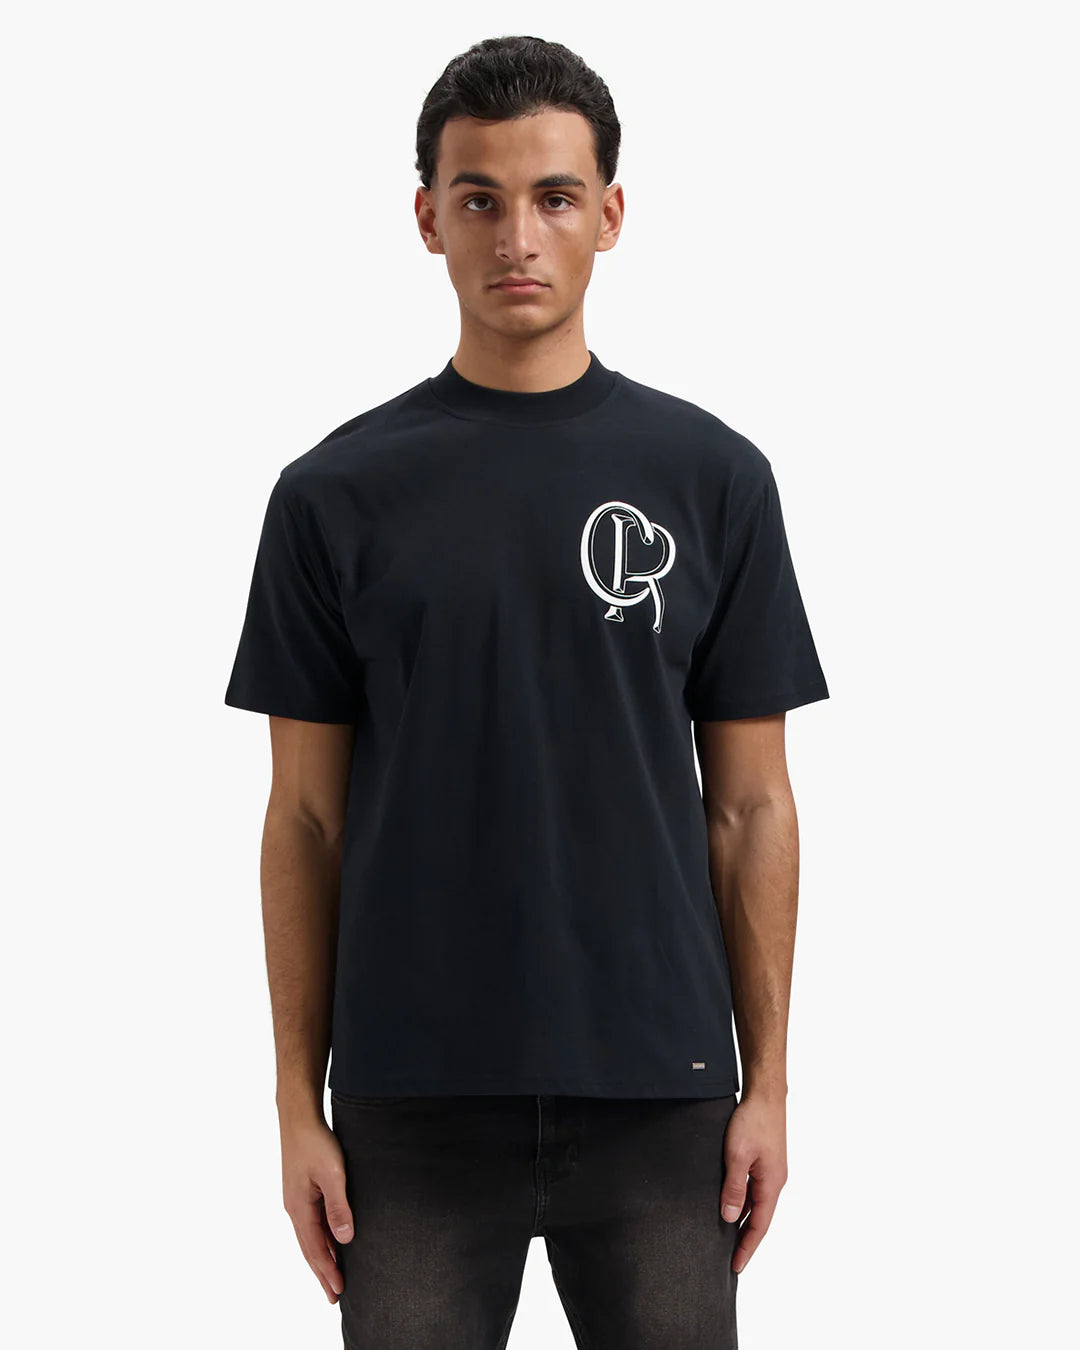 Croyez initial t-shirt - black